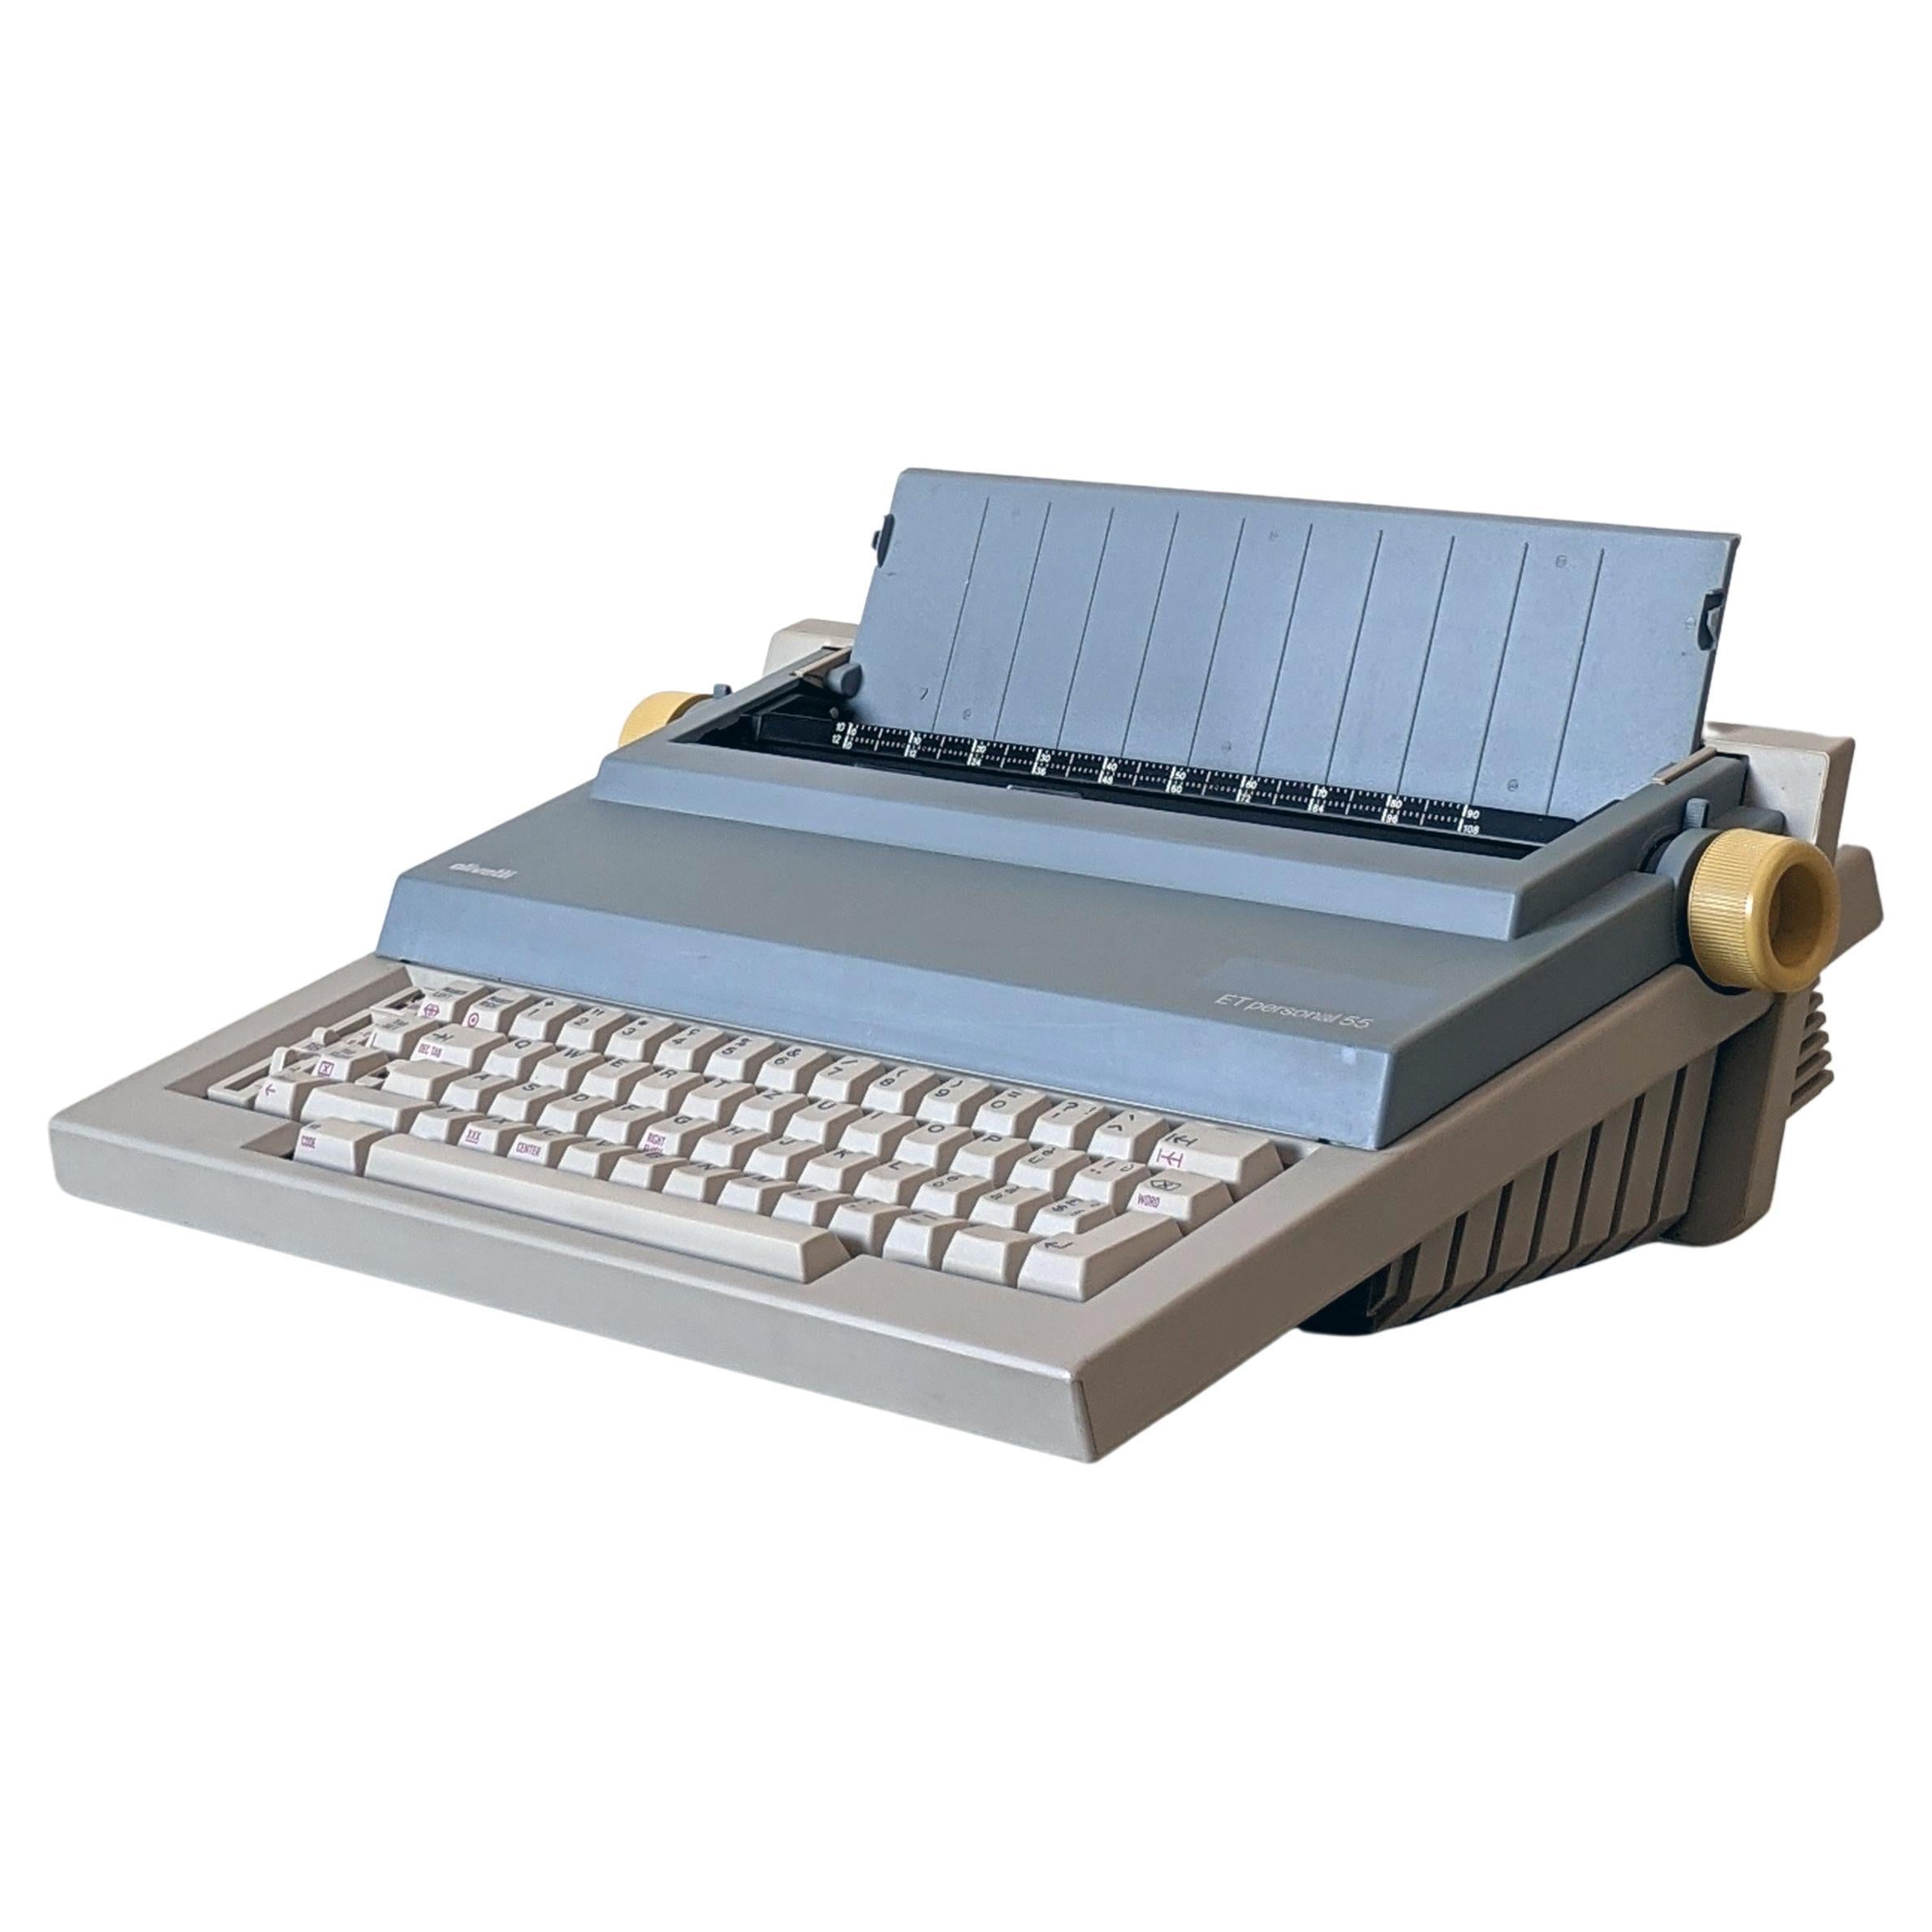 Mario Bellini, ET Personal 55 Portable Typewriter for Olivetti 1985-86